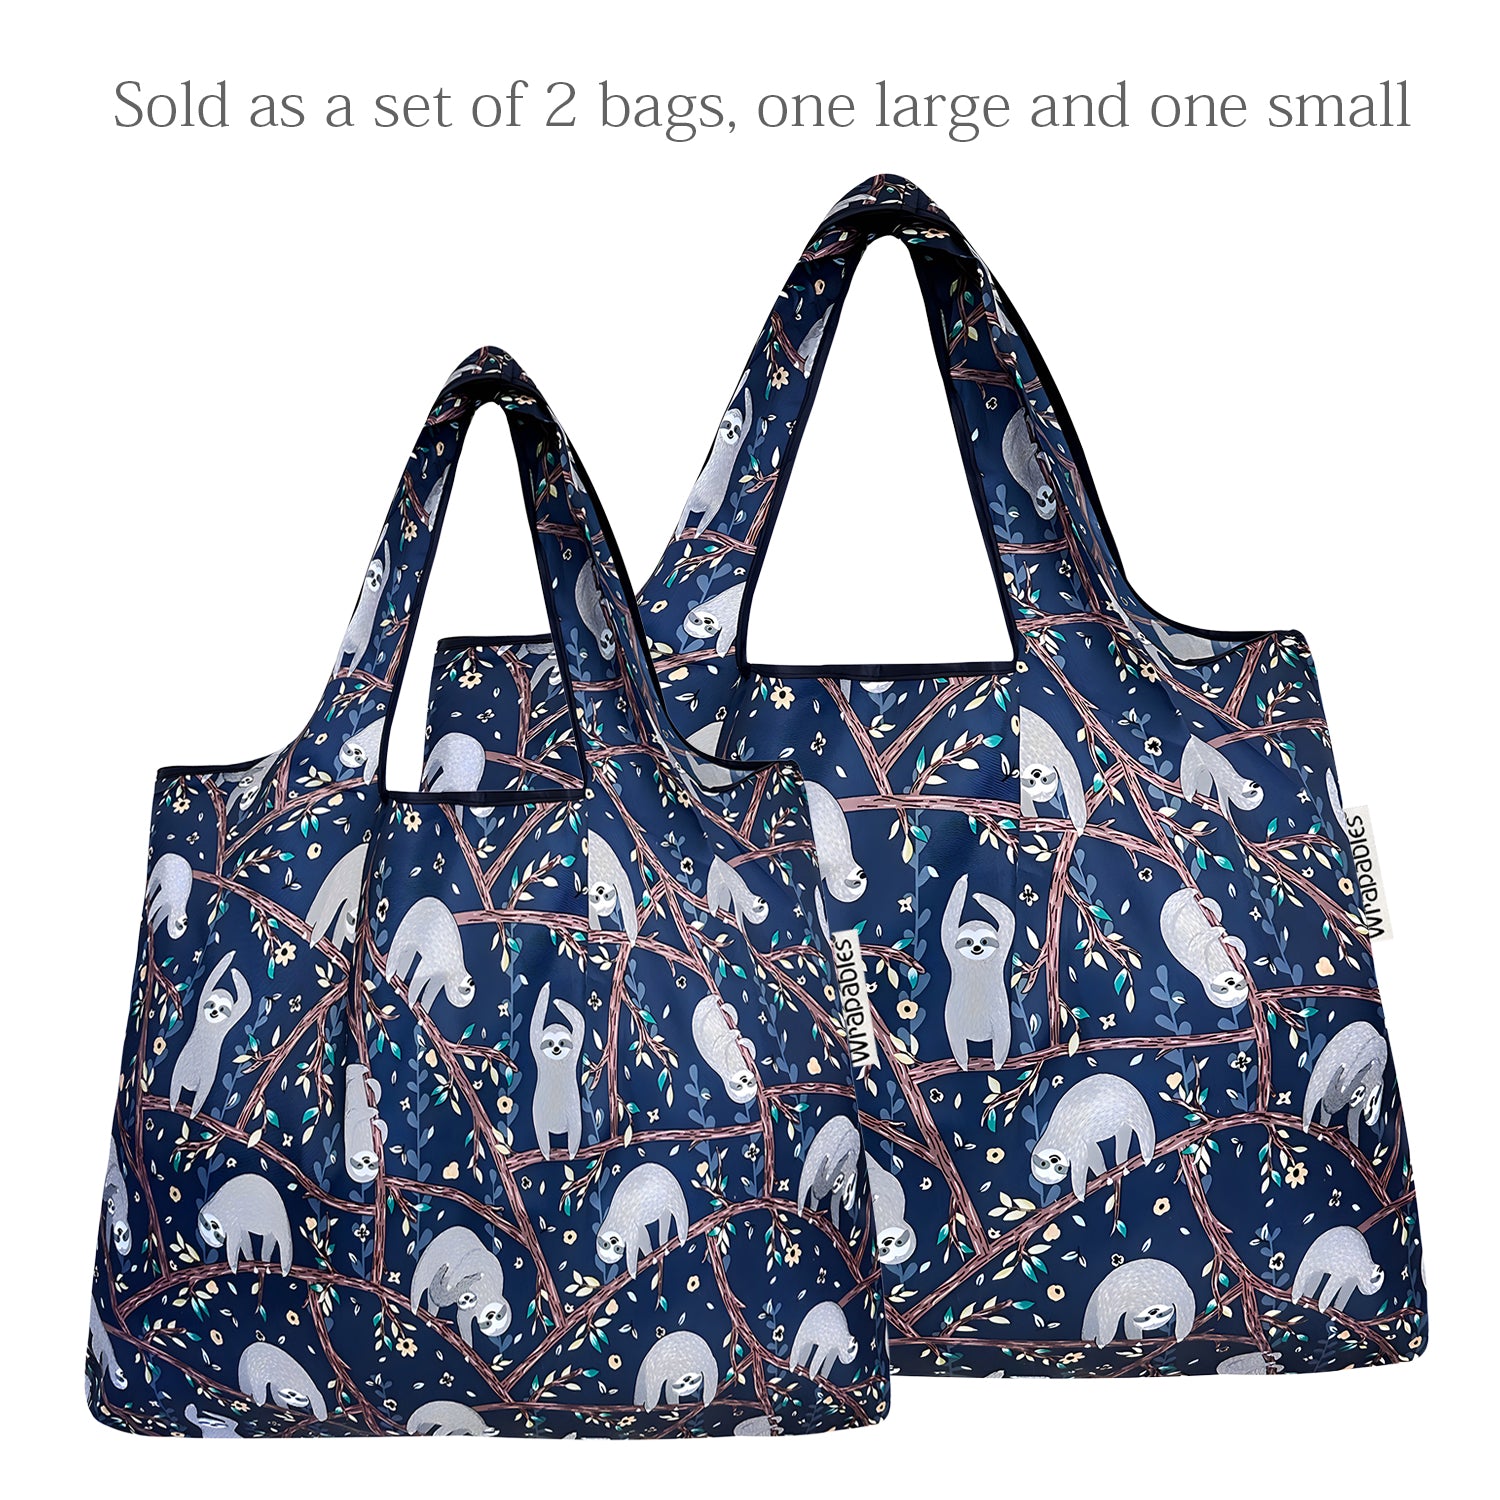 Black Reusable Cotton Tote Bags Eco Foldable Shoulder Bag Large Handbag  Solid Fabric Canvas Tote Bags for Market Bags - AliExpress